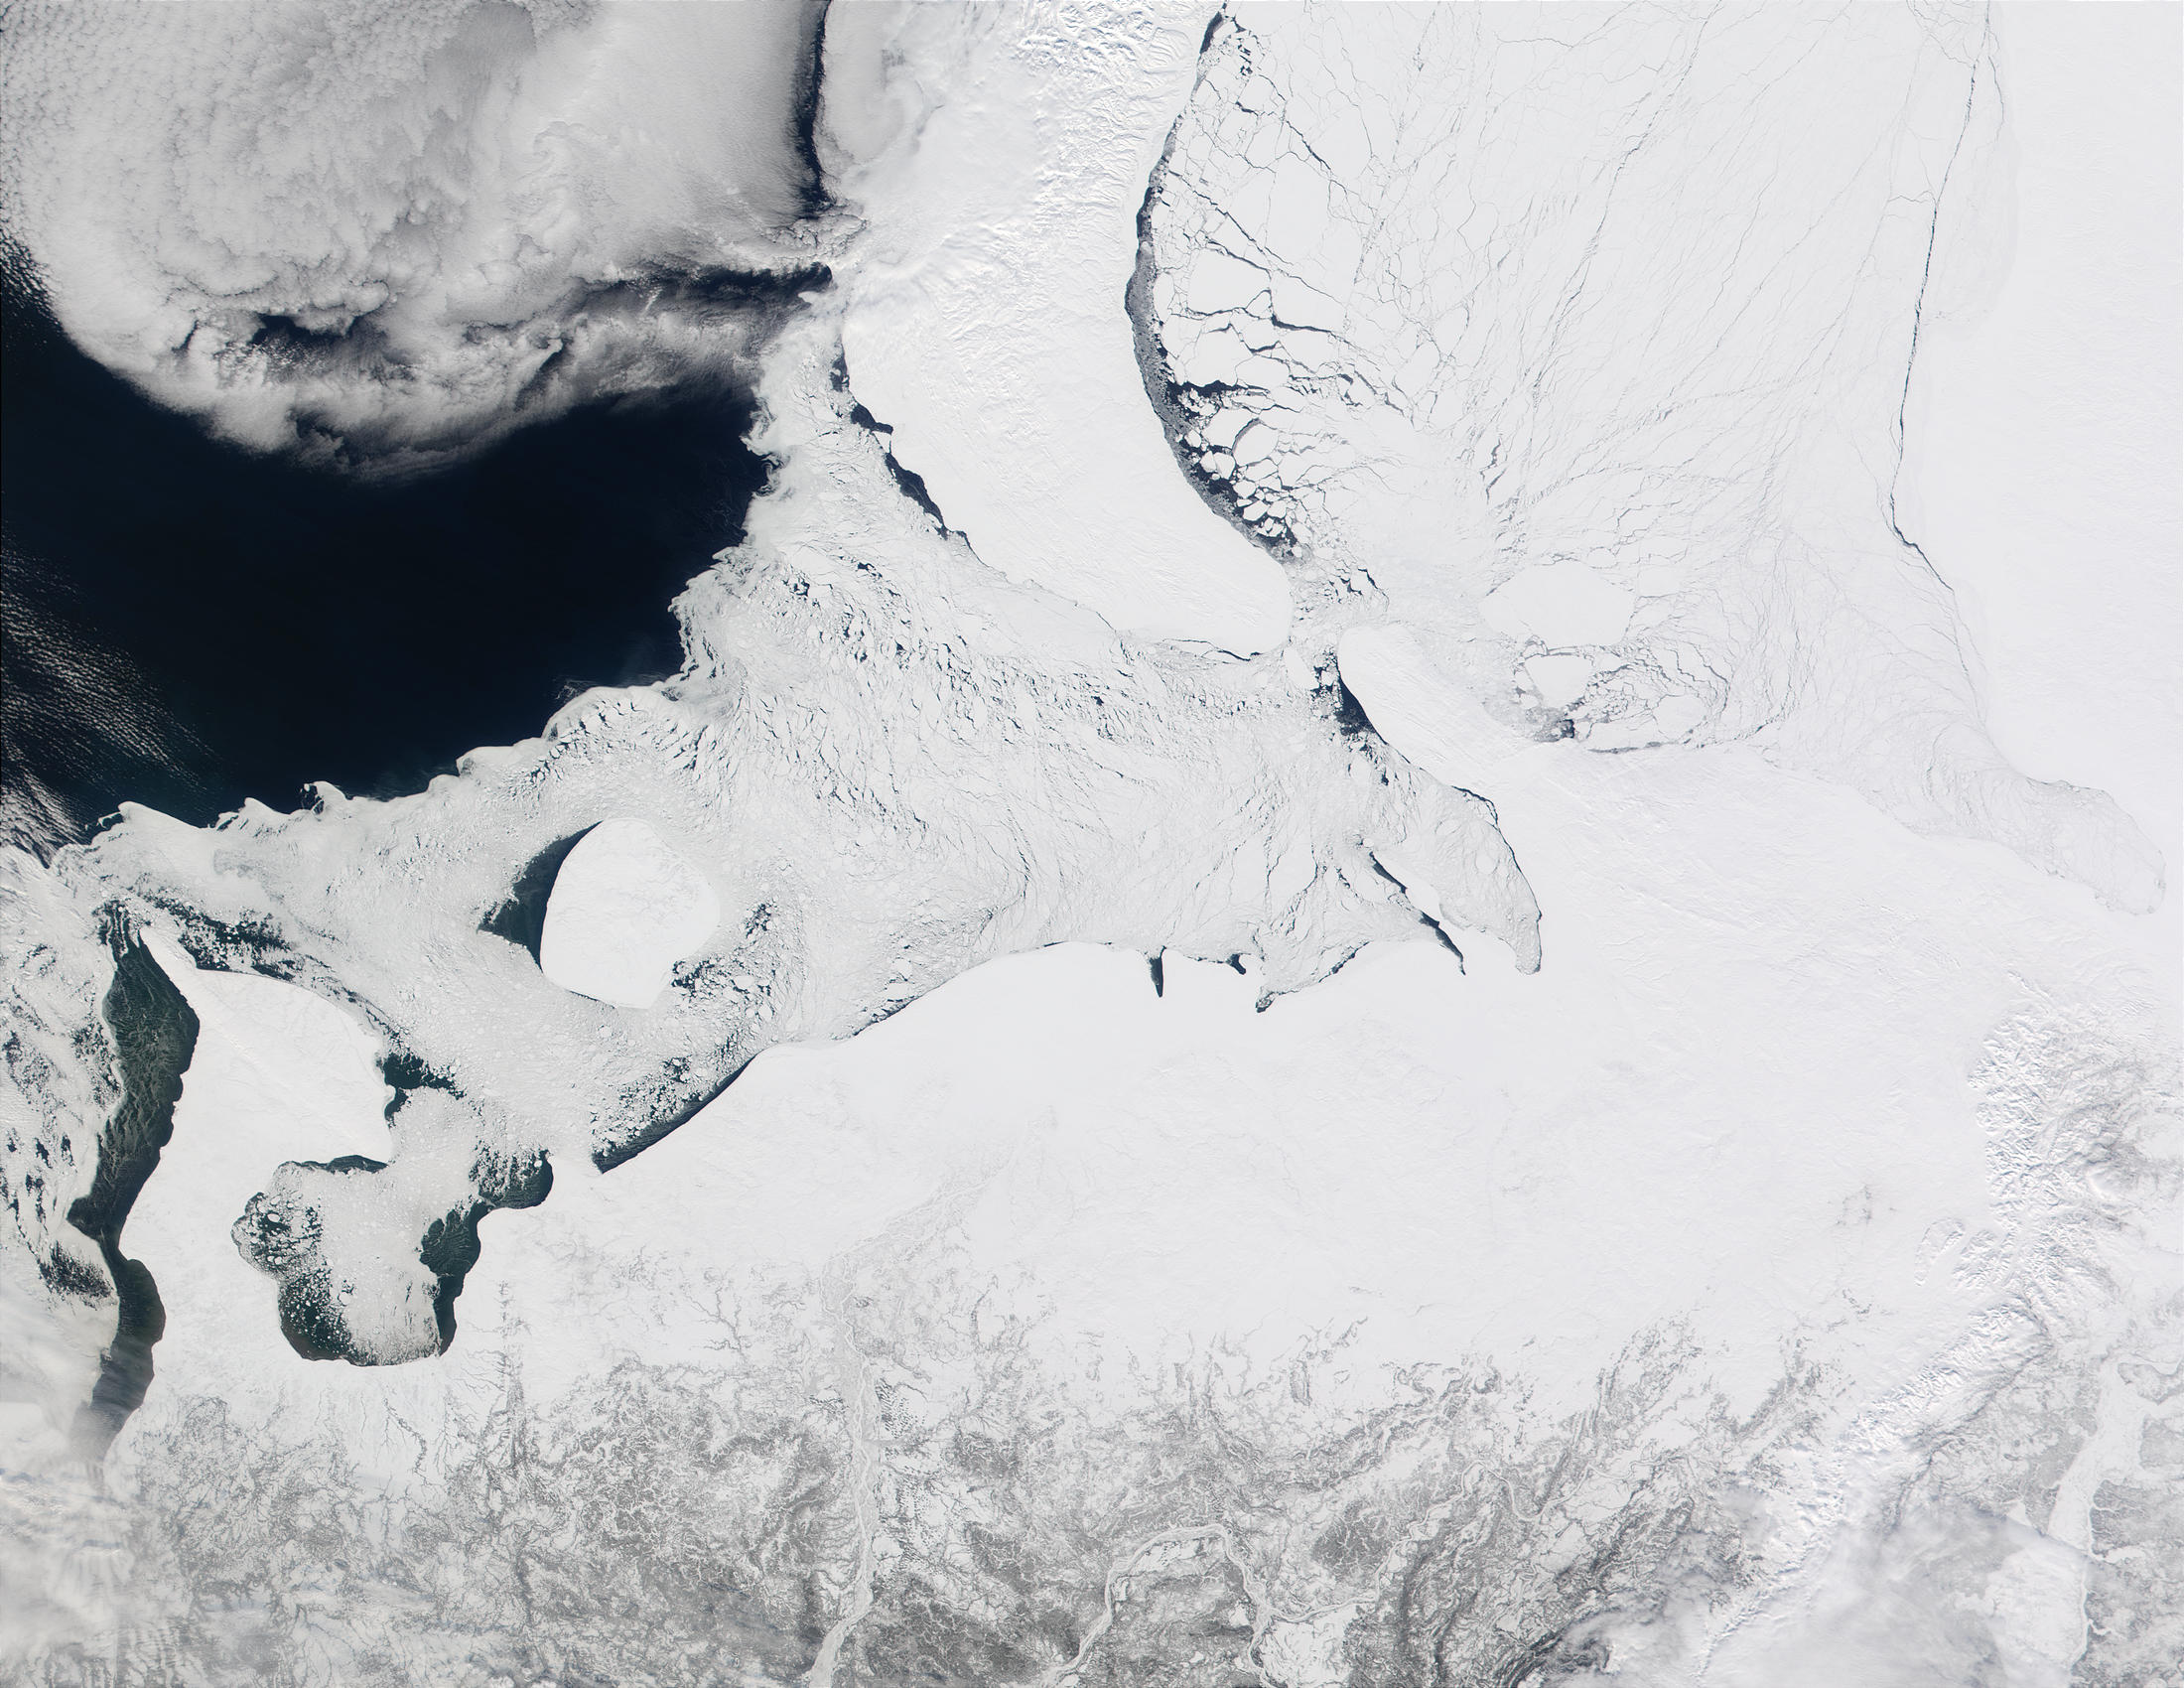 Barents Sea and Kara Sea Coast, Russia - related image preview